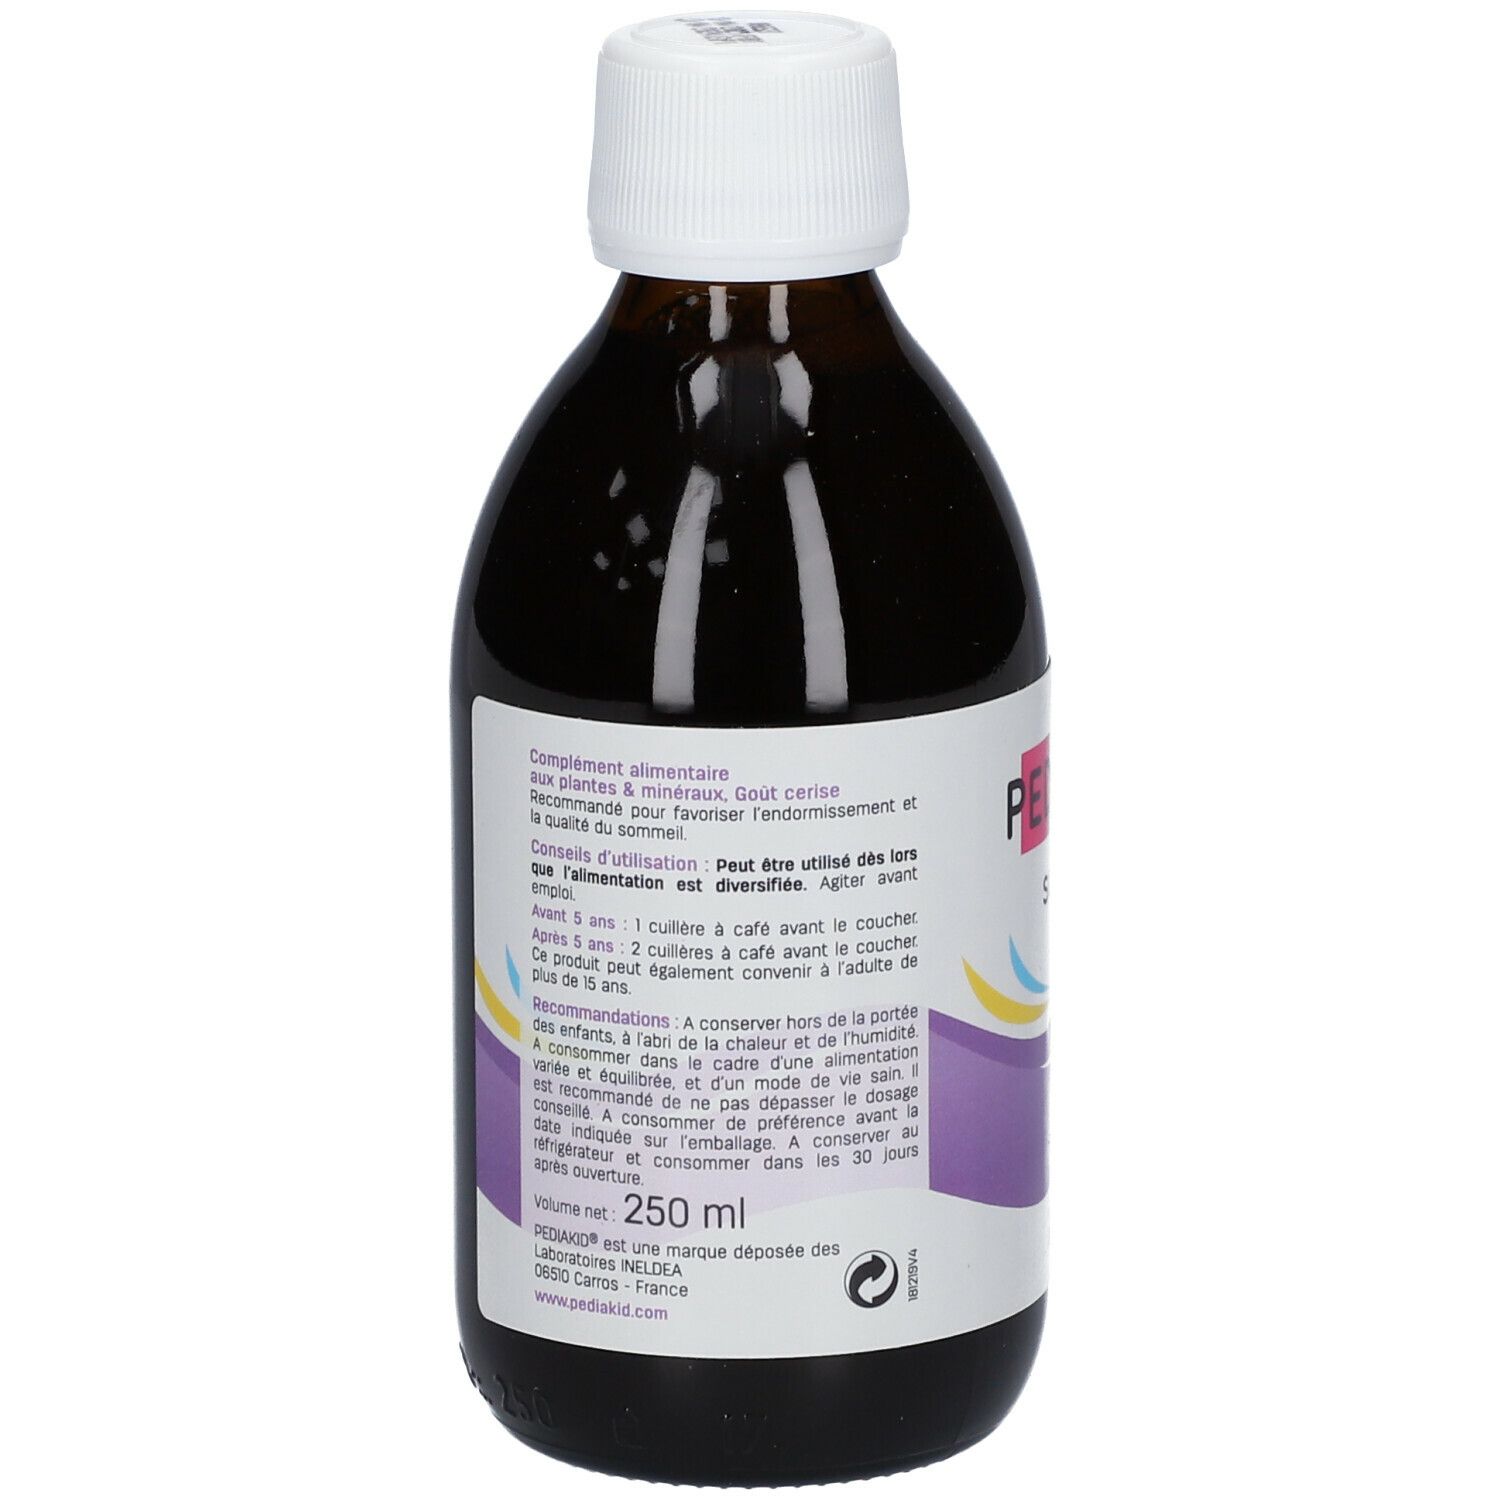 PEDIAKID® Sirop Sommeil 250 ml - Redcare Apotheke